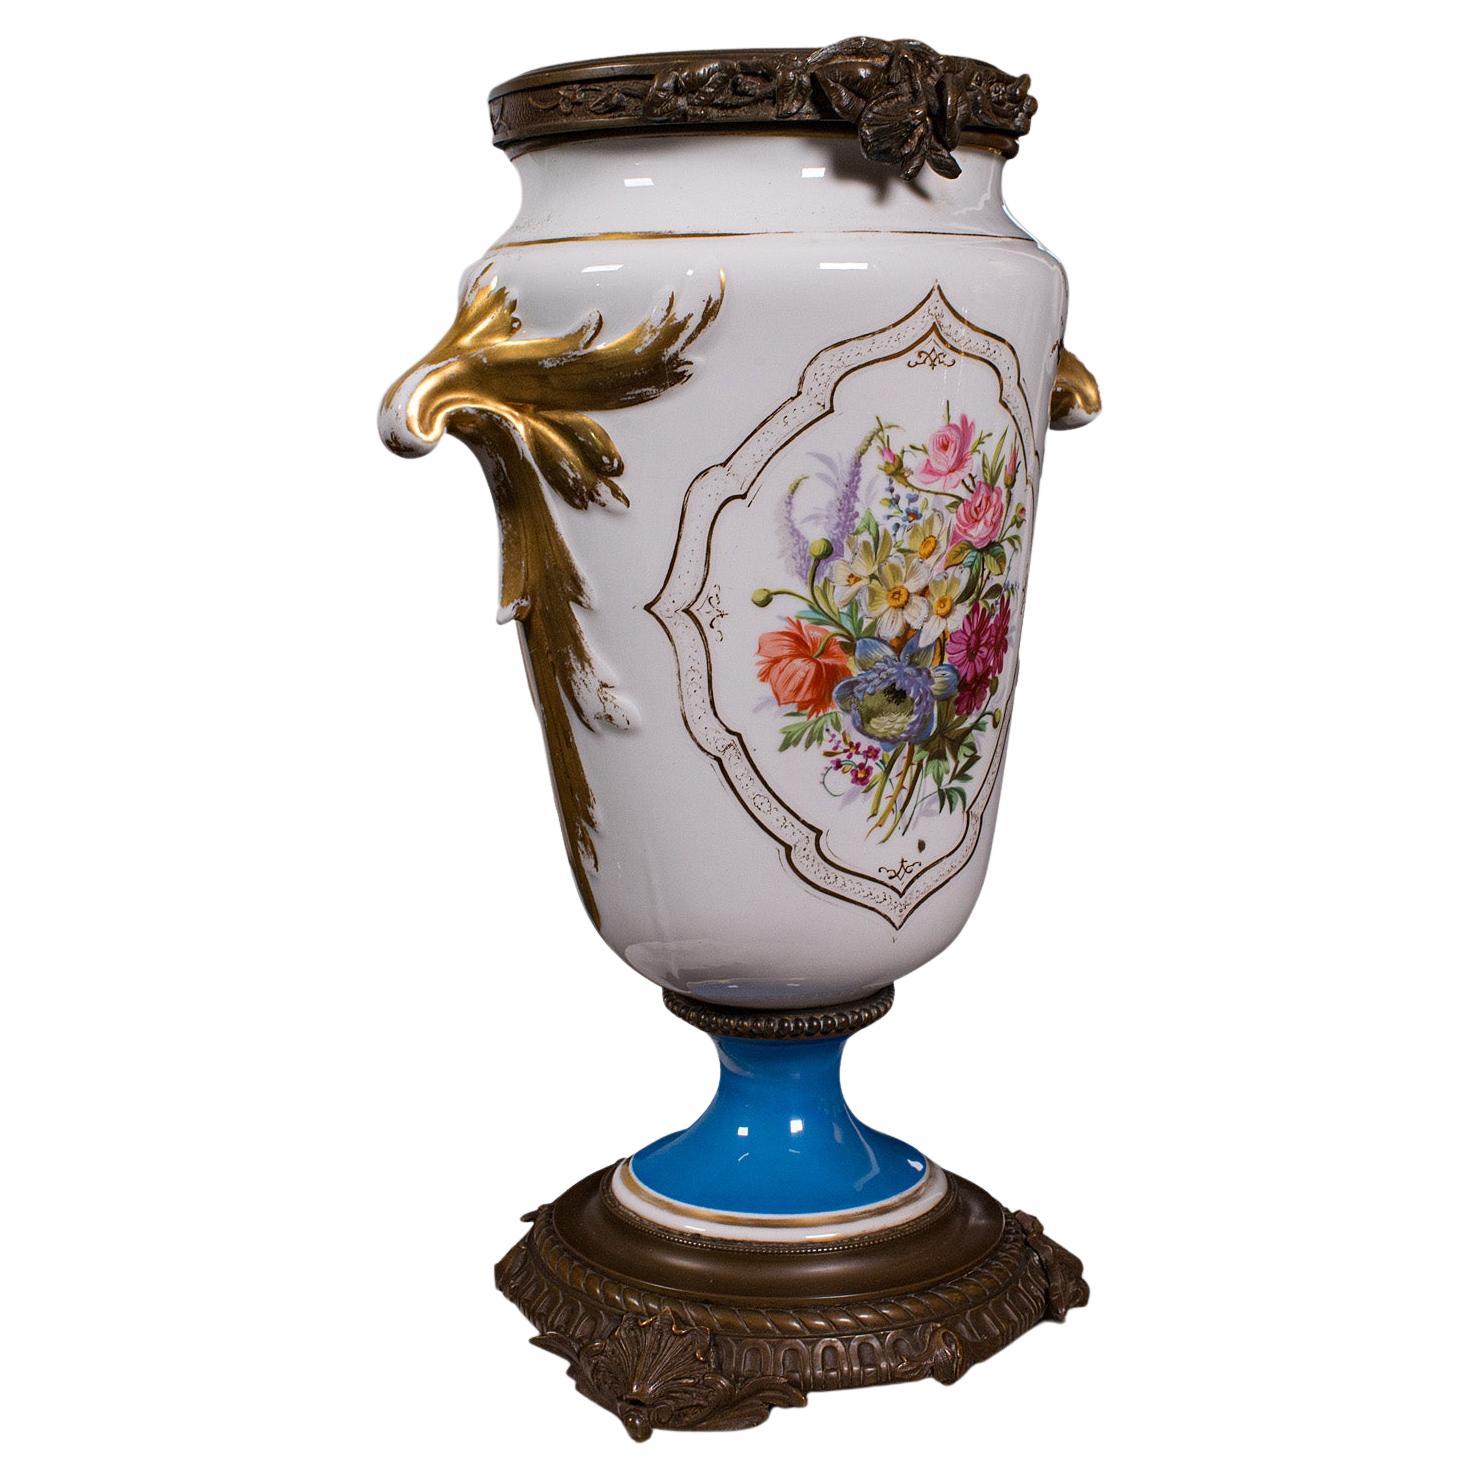 Antique Decorative Jardiniere, French, Ceramic, Display Planter, Vase, Victorian For Sale